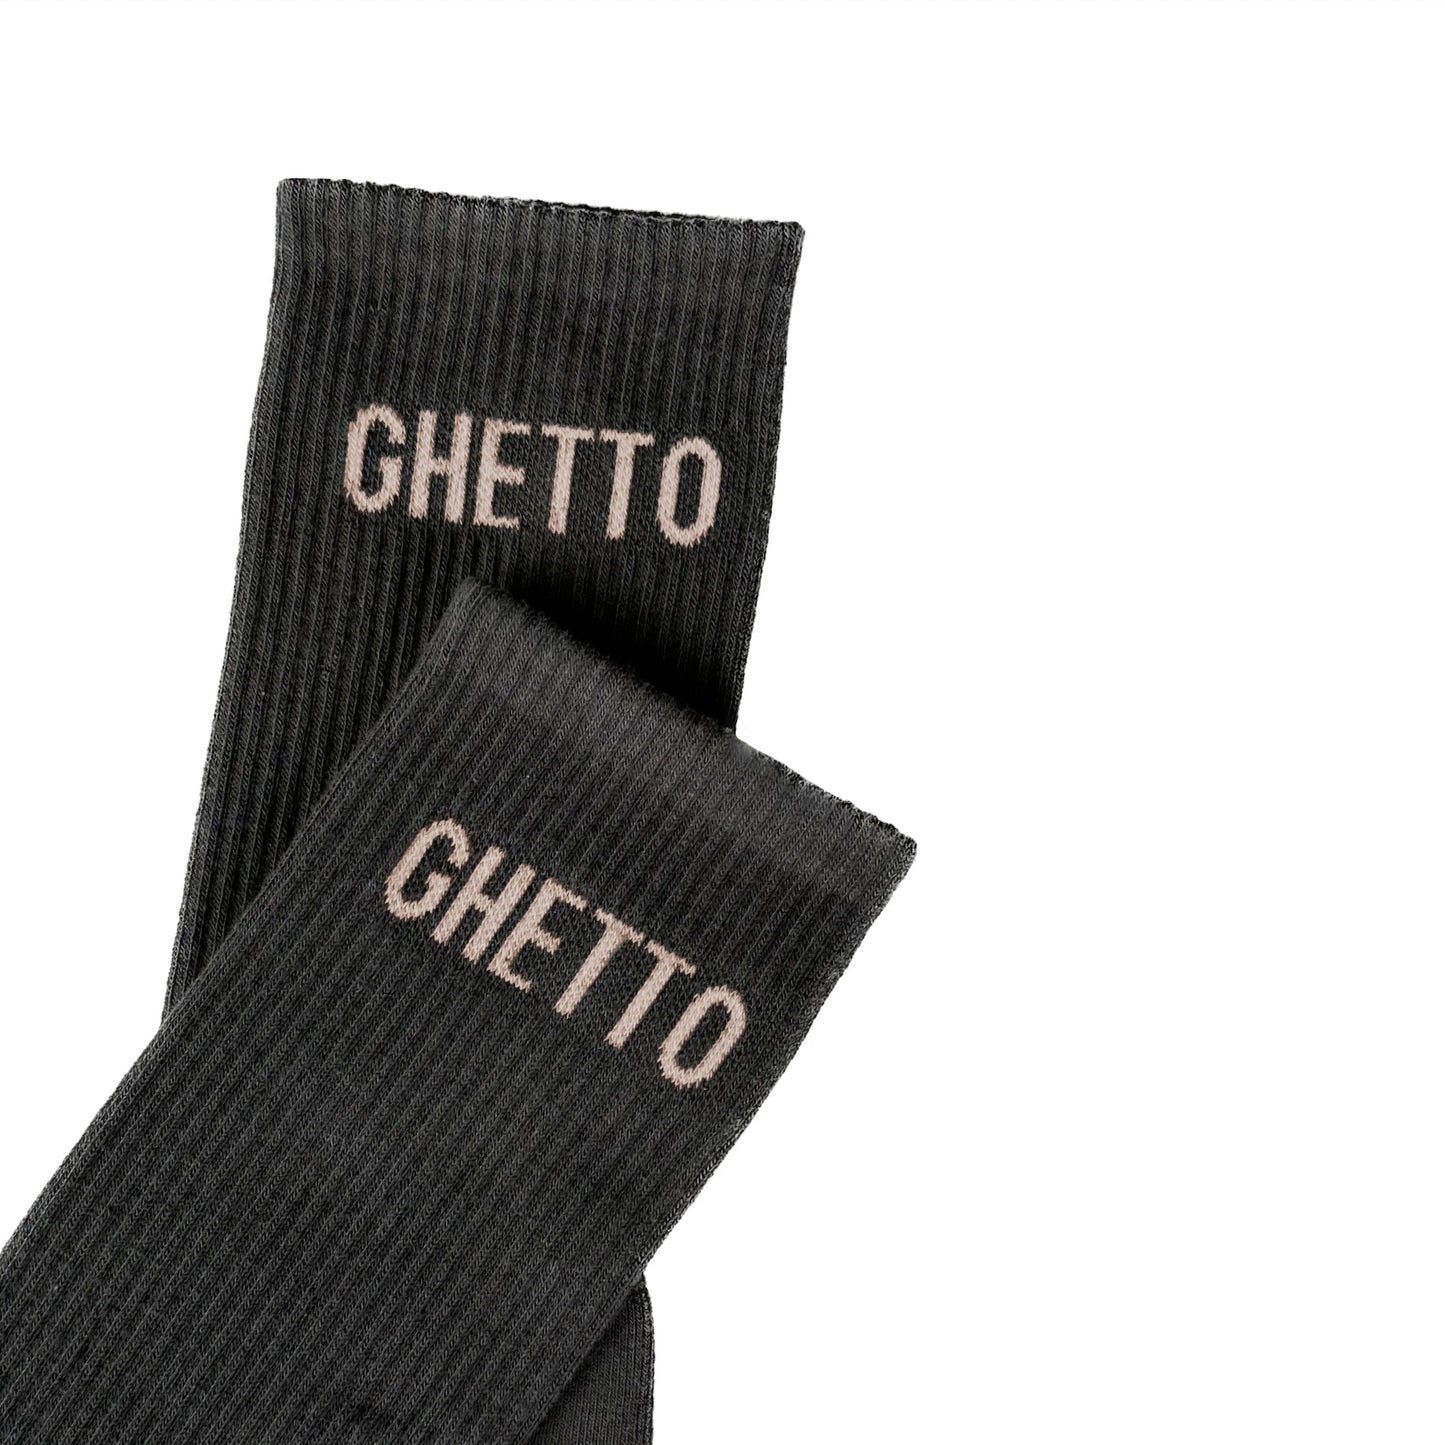 BLACK/CREAM Ghetto Socks